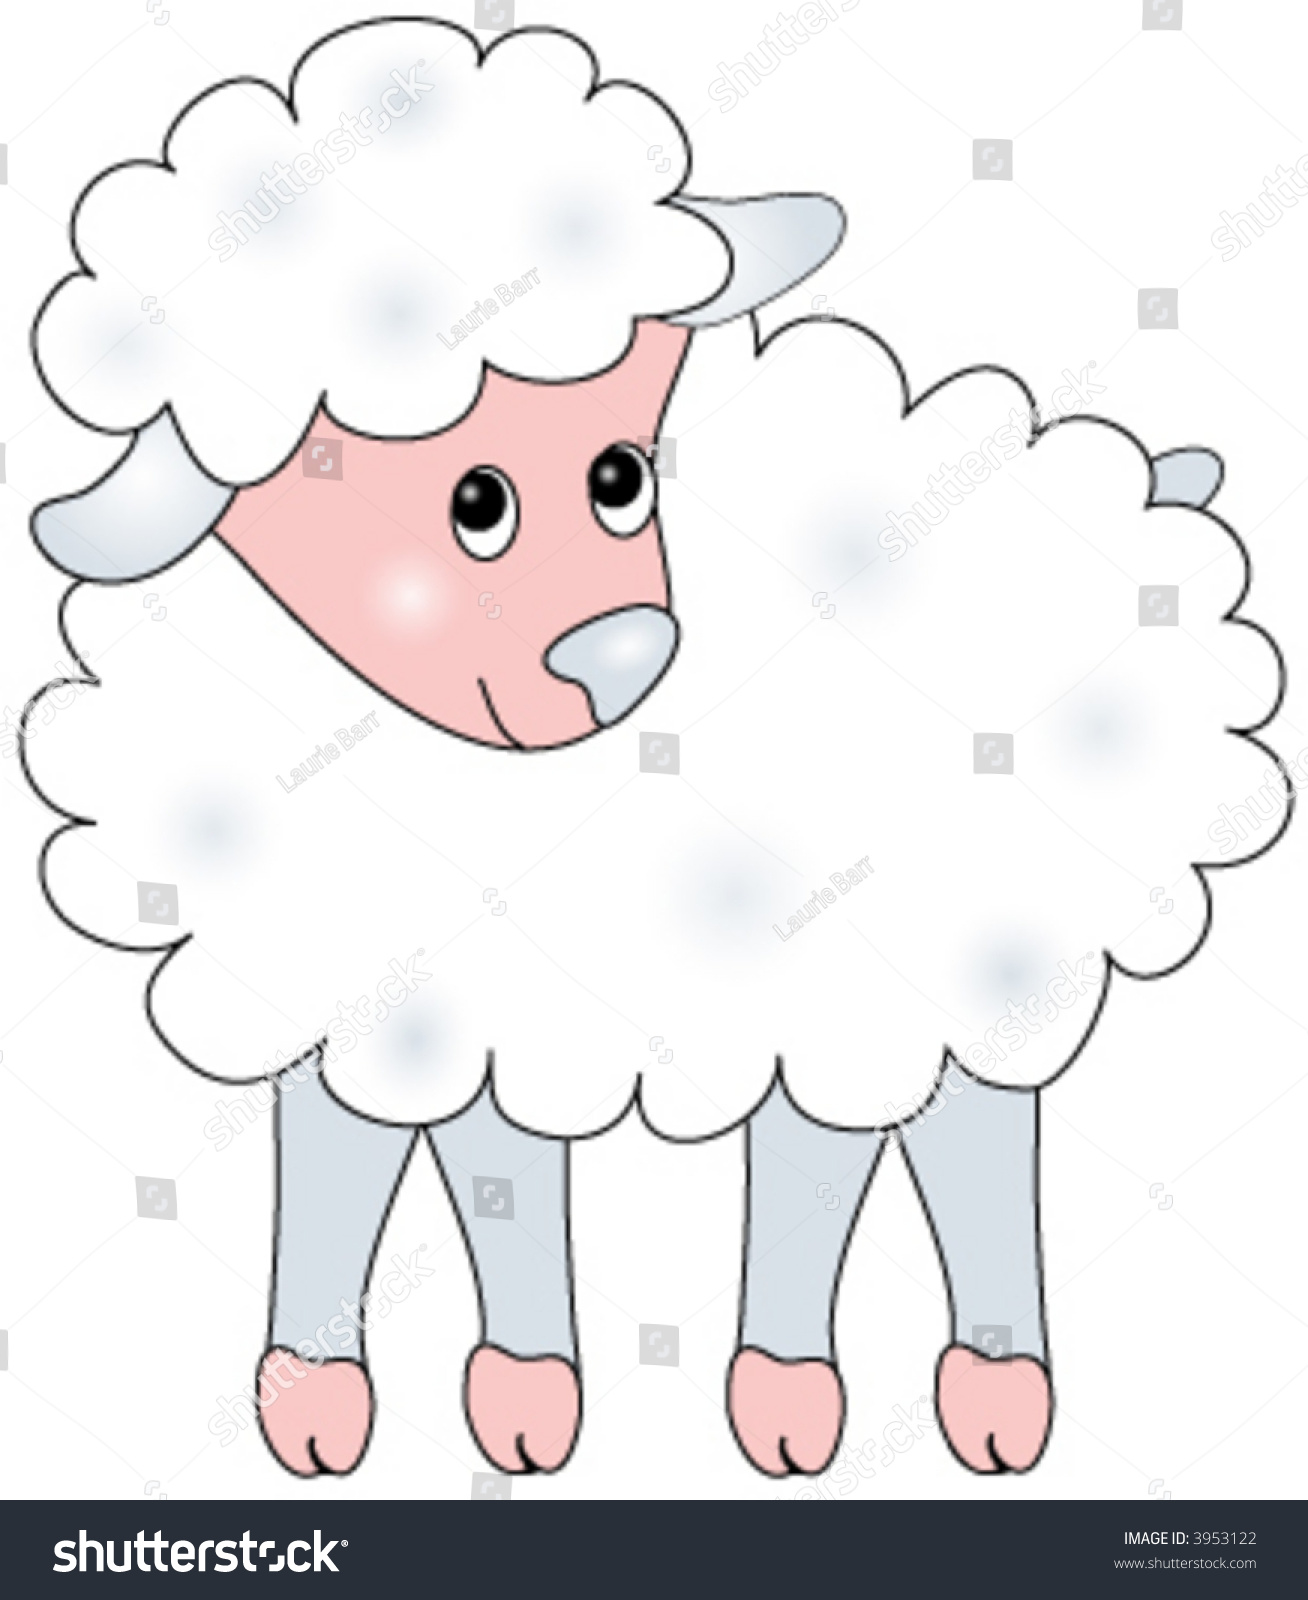 Download Vector Illustration Baby Sheep Stock Vector 3953122 - Shutterstock